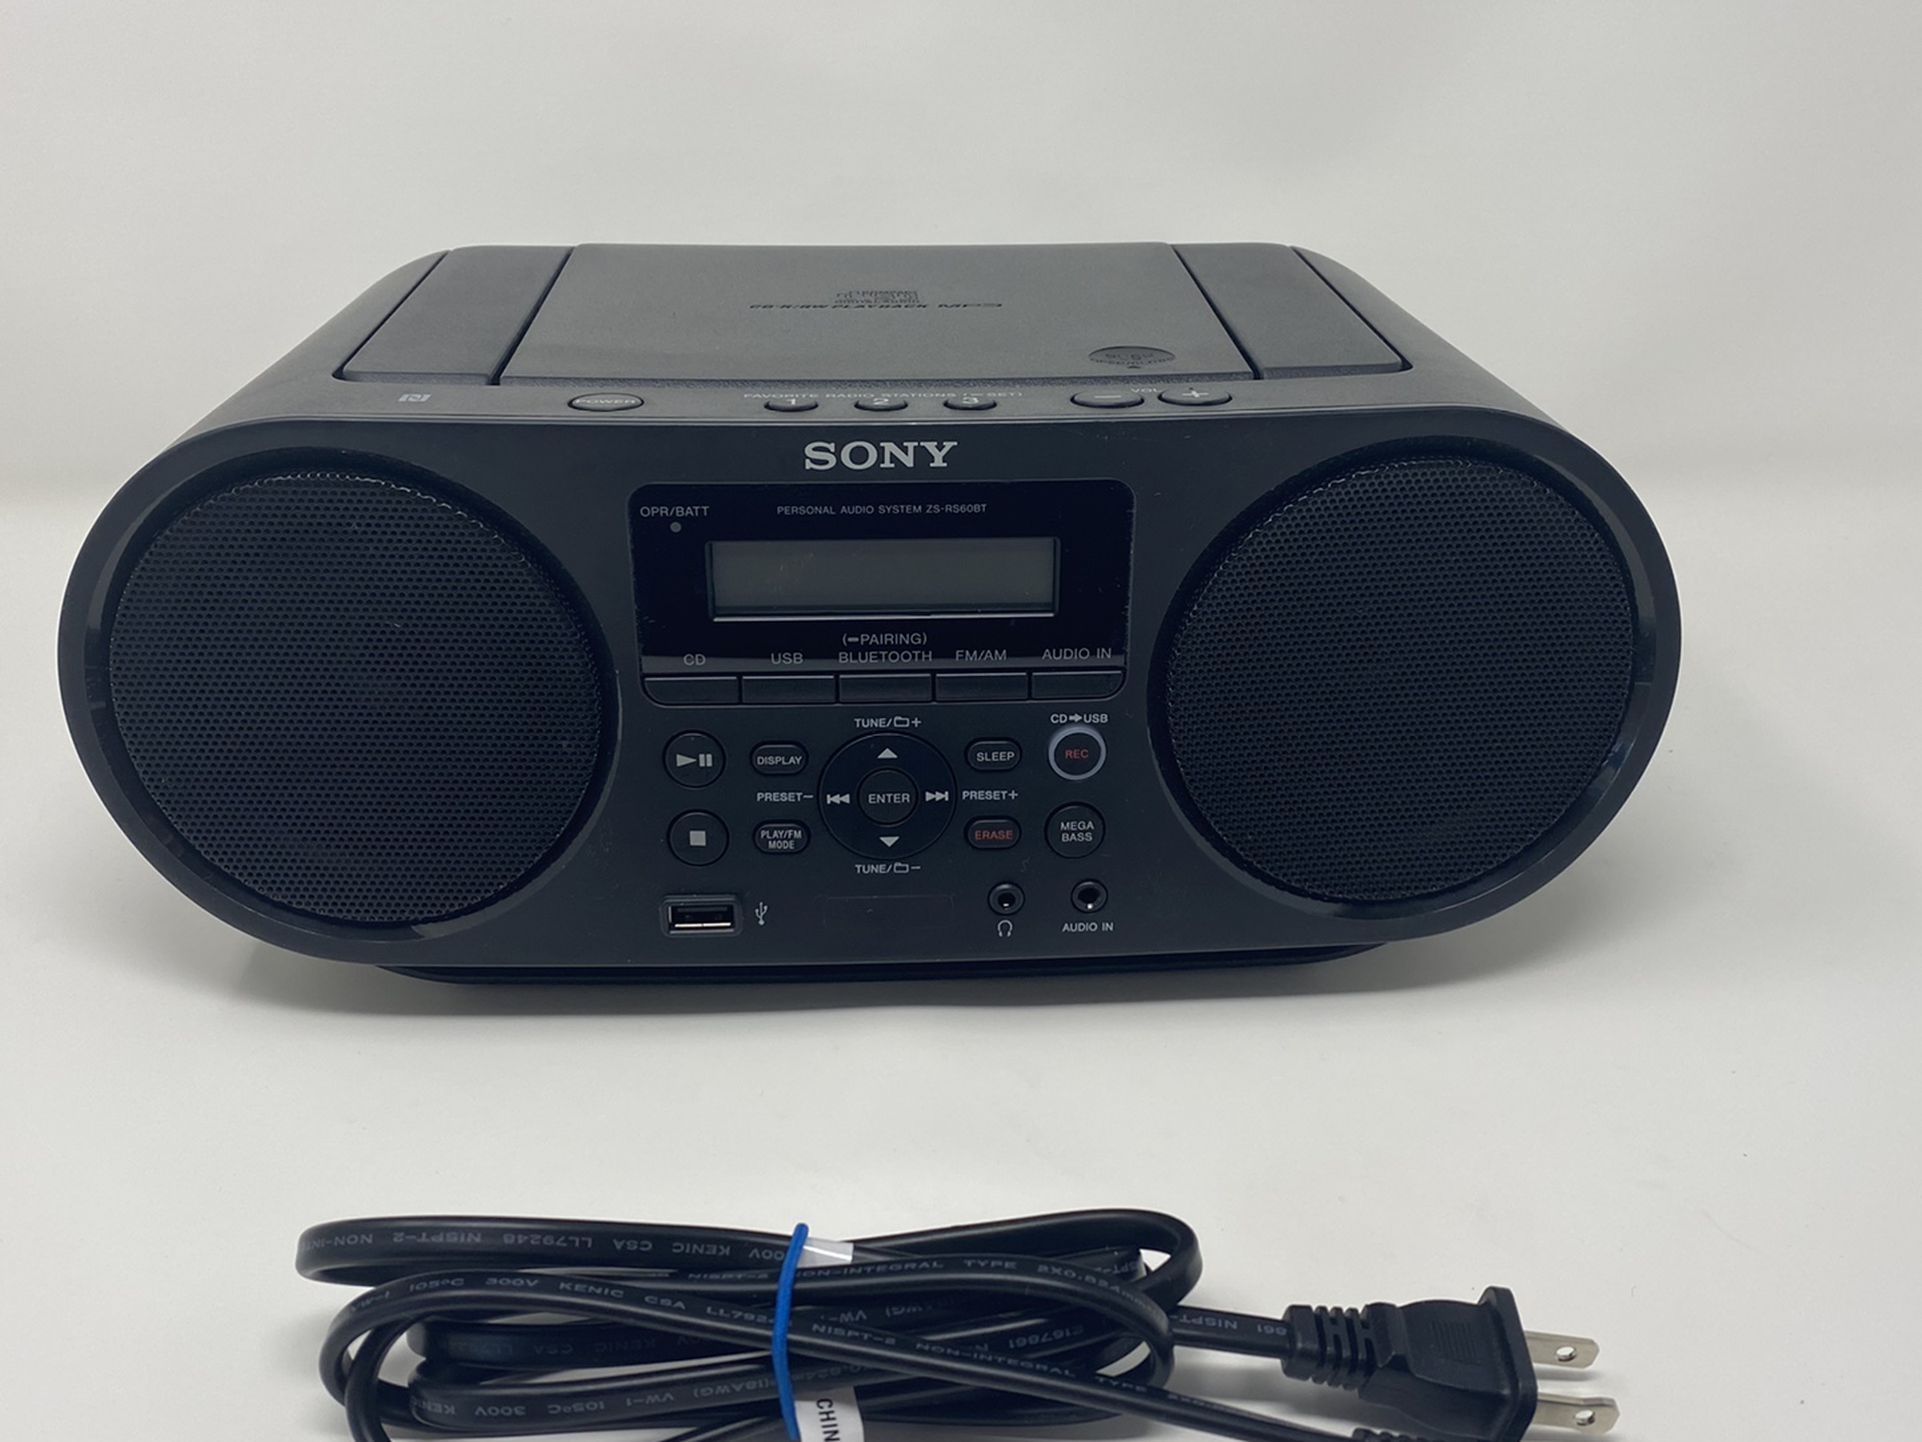 Sony Bluetooth Portable Cd Player Stereo Sound System Bundle/Digital Tuner AM/FM Radio Cd Player Mega Bass Reflex Stereo Sound System